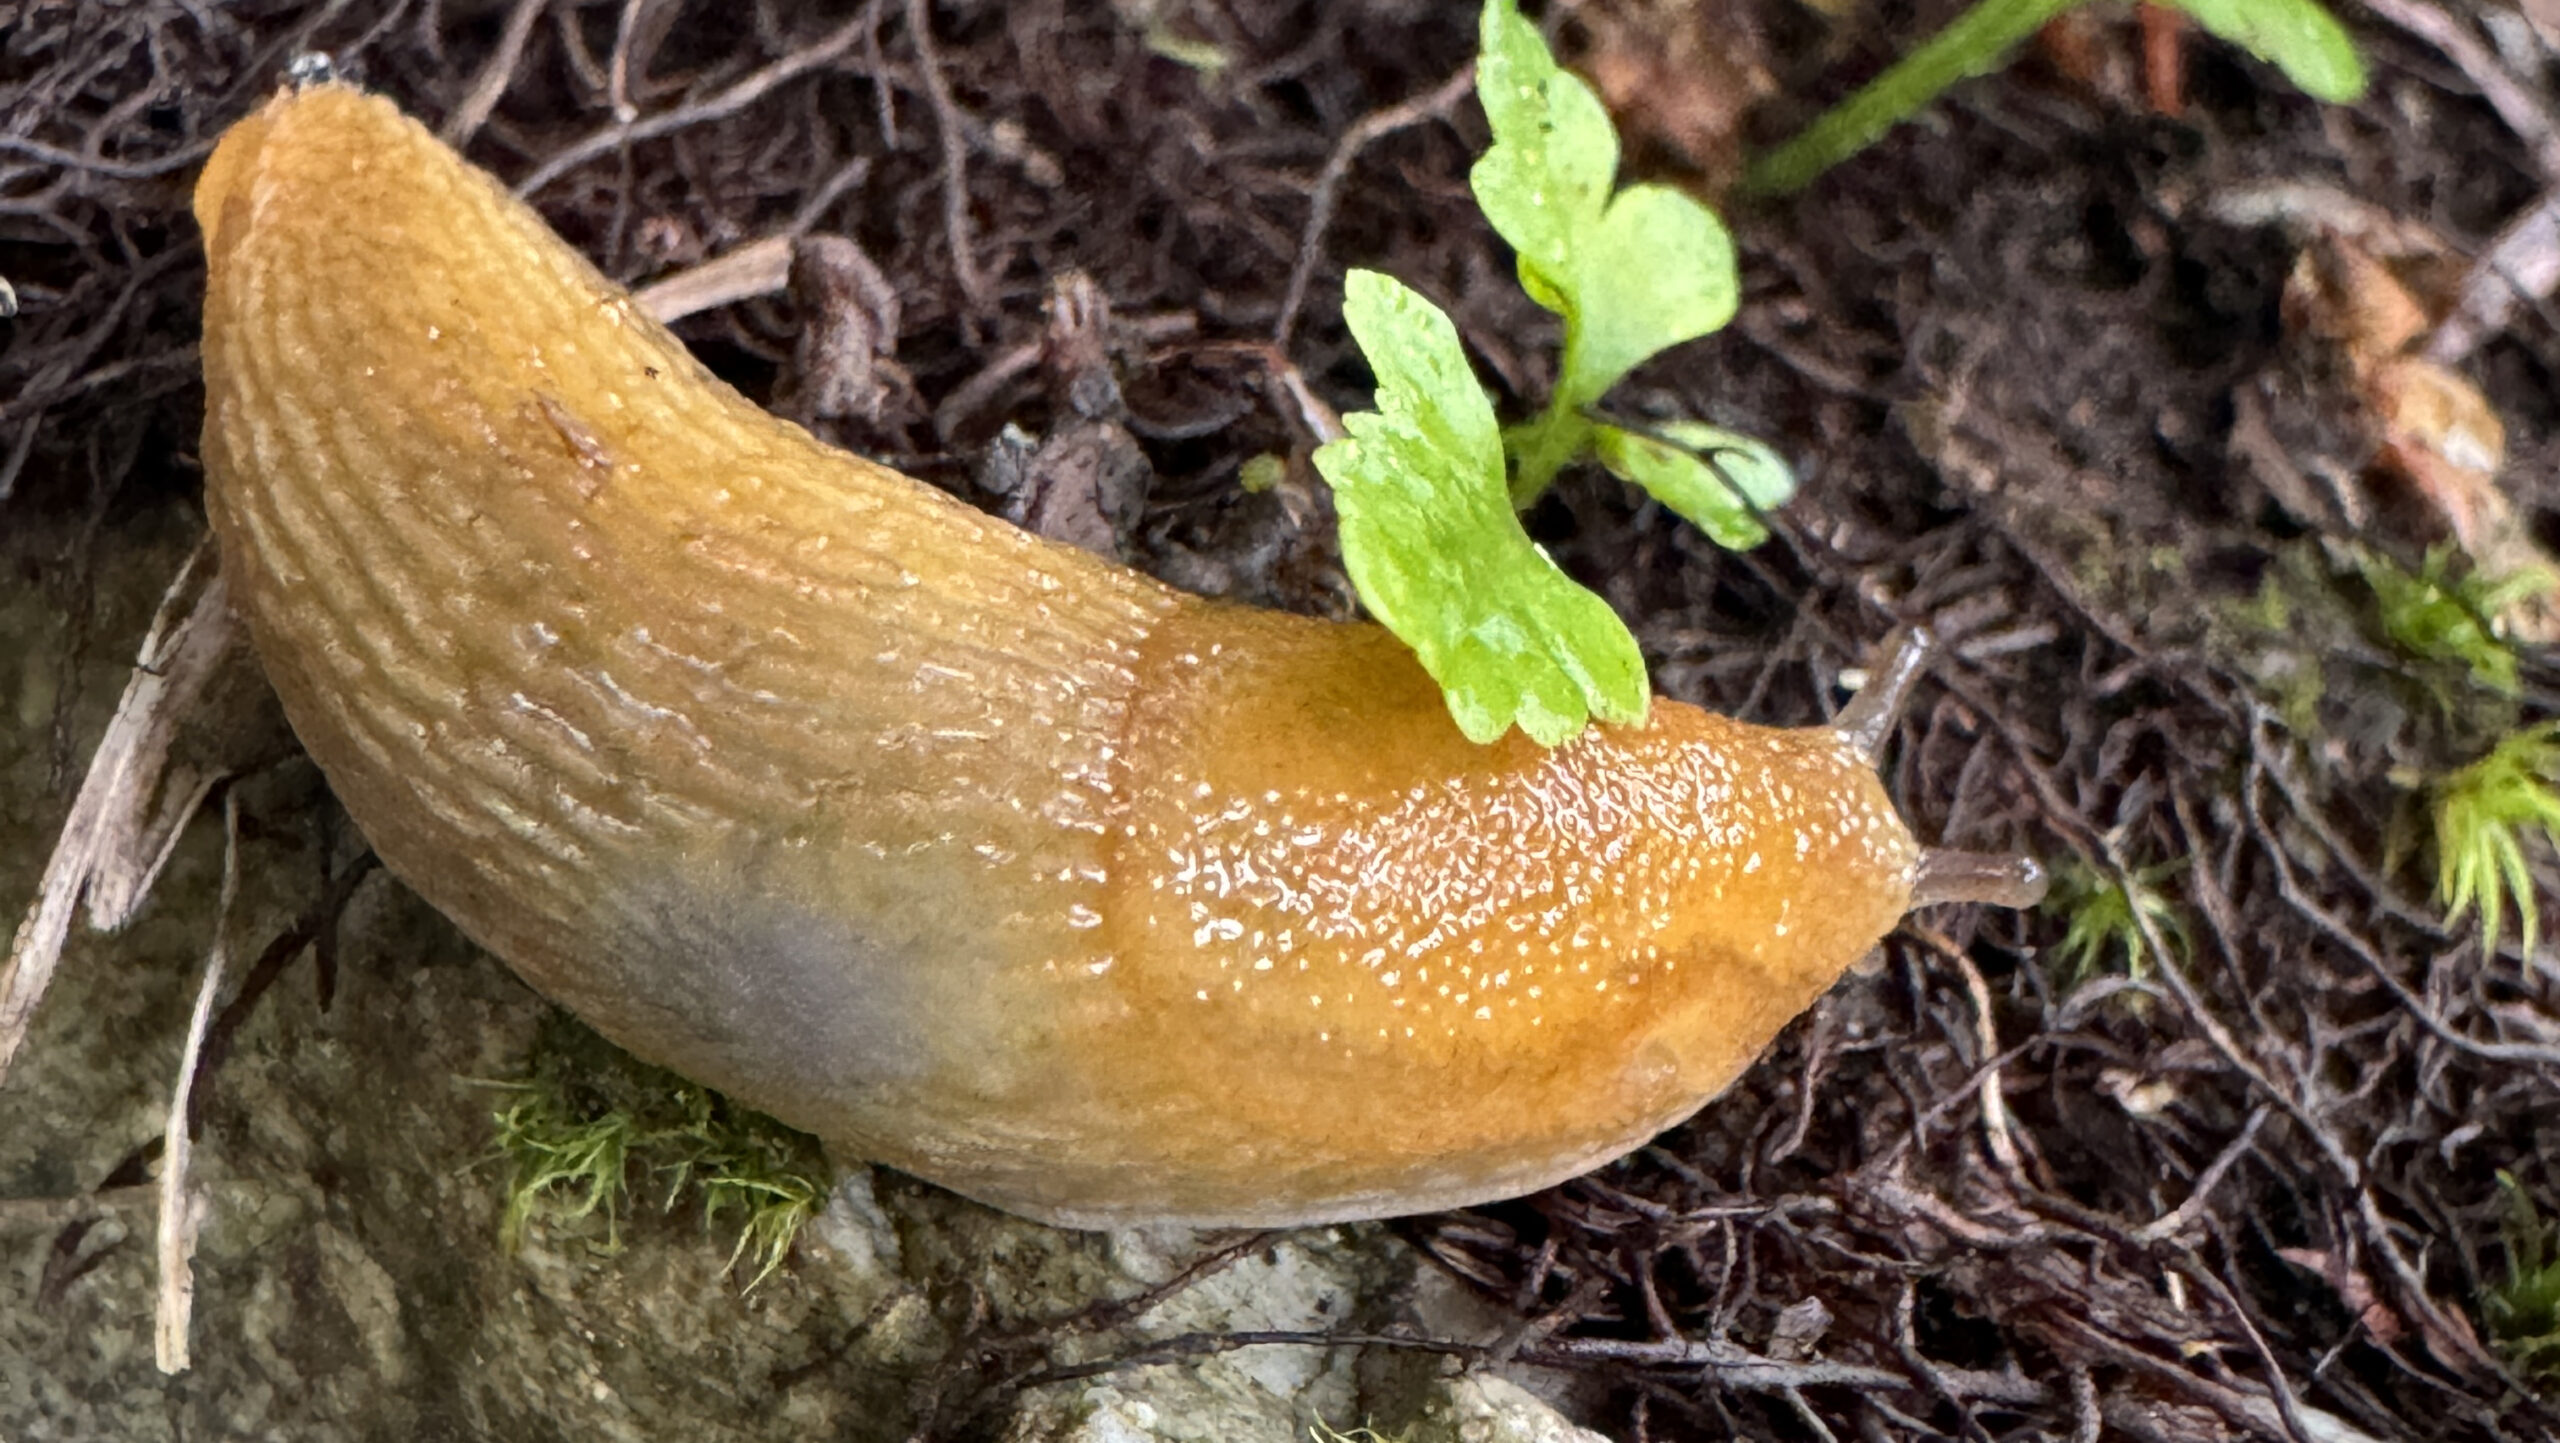 Slugs: Sticky, slimy, and underloved